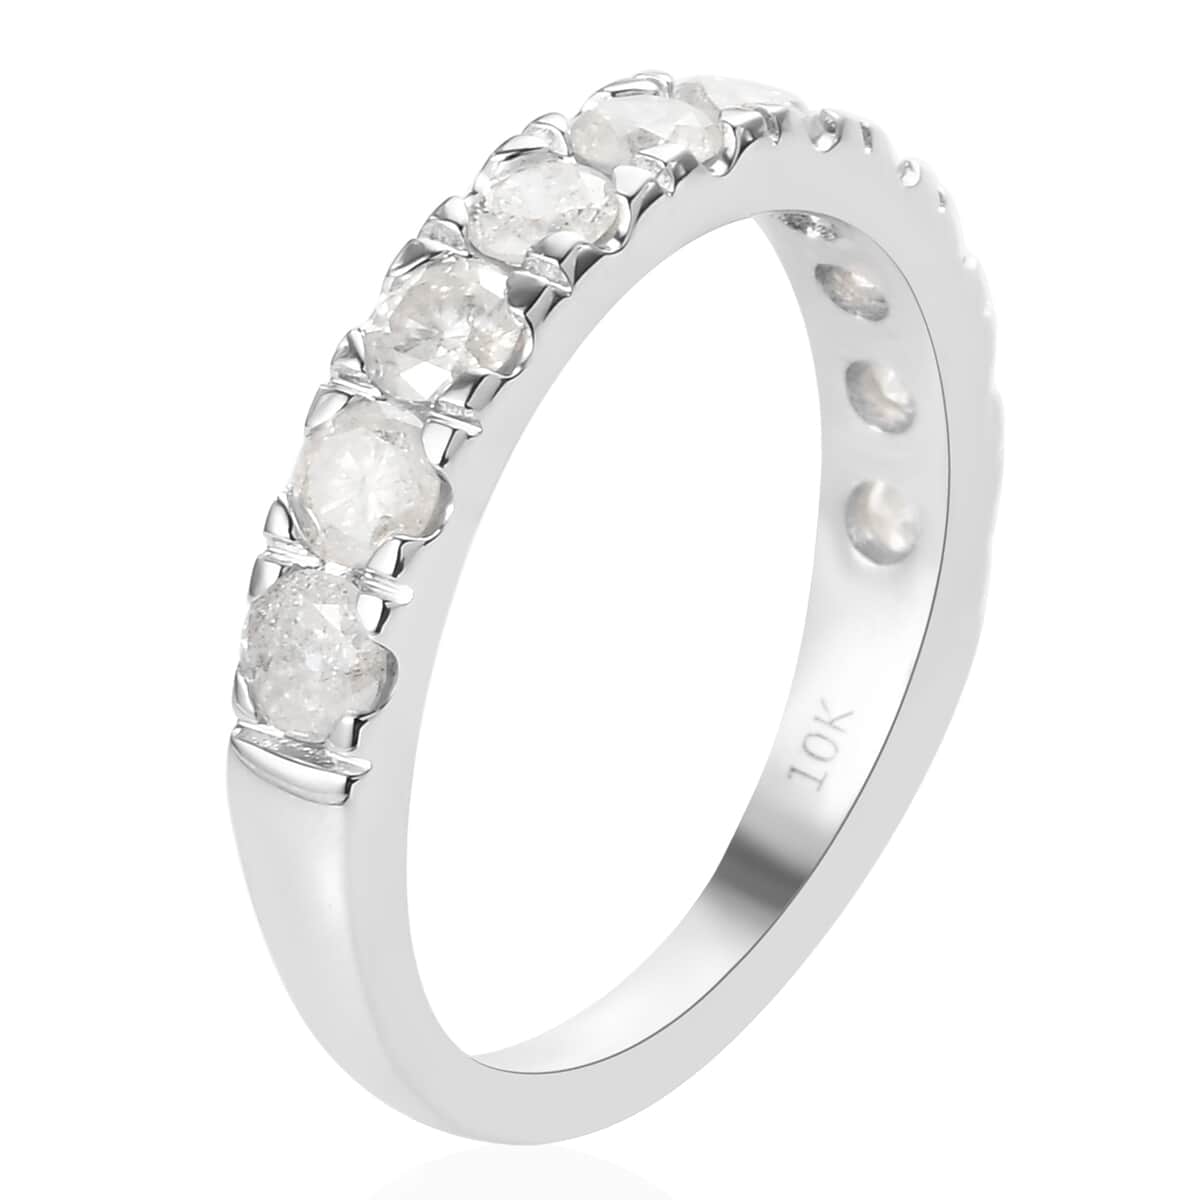 LUXORO 10K White Gold G-H I2 Diamond Band Ring (Size 6.0) 2.50 Grams 1.00 ctw image number 3